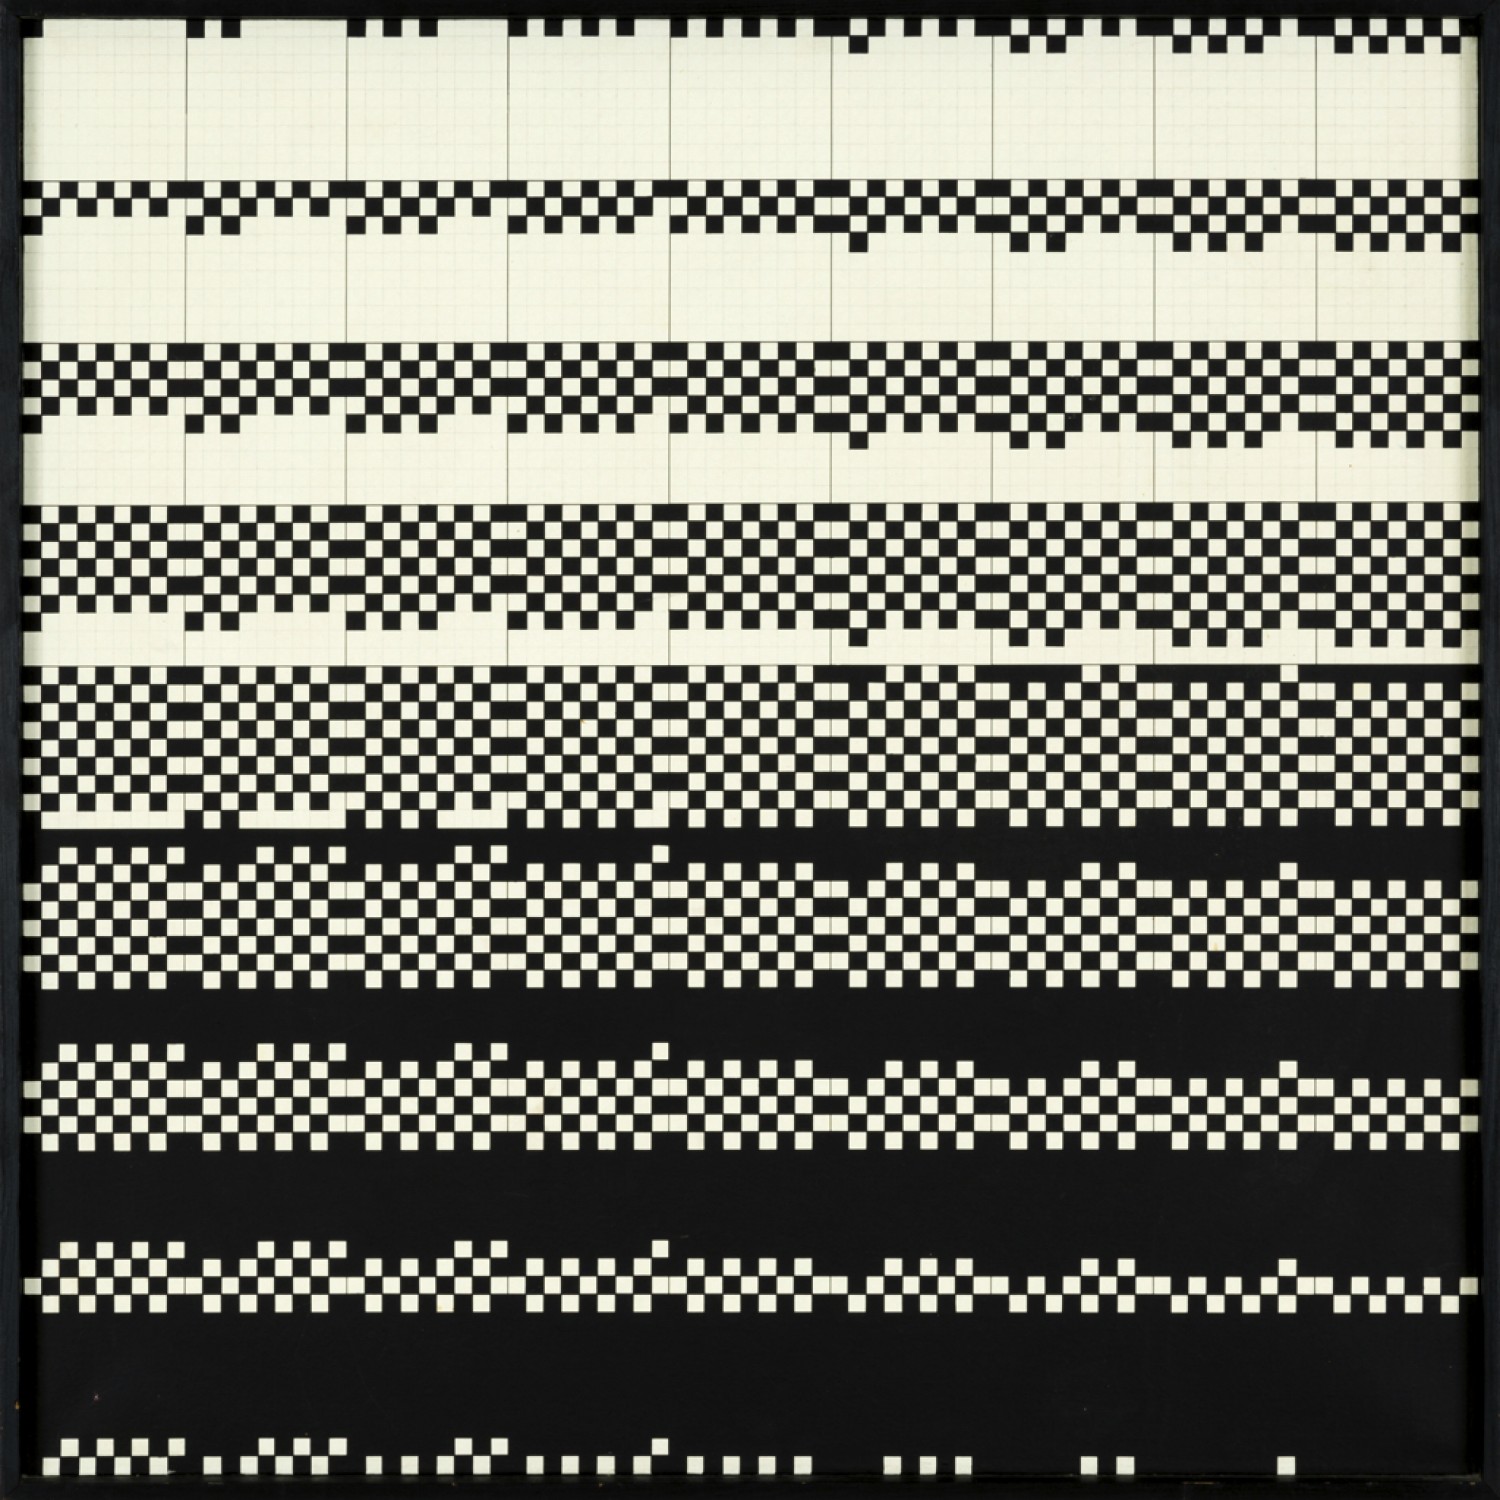 Ryszard Winiarski: Minimax II. – Second game 9 × 9, 1978 akryl na plátně, 80 x 80 cm dosažená cena: 1 260 000 Kč 1. Art Consulting, 7. 6. 2018